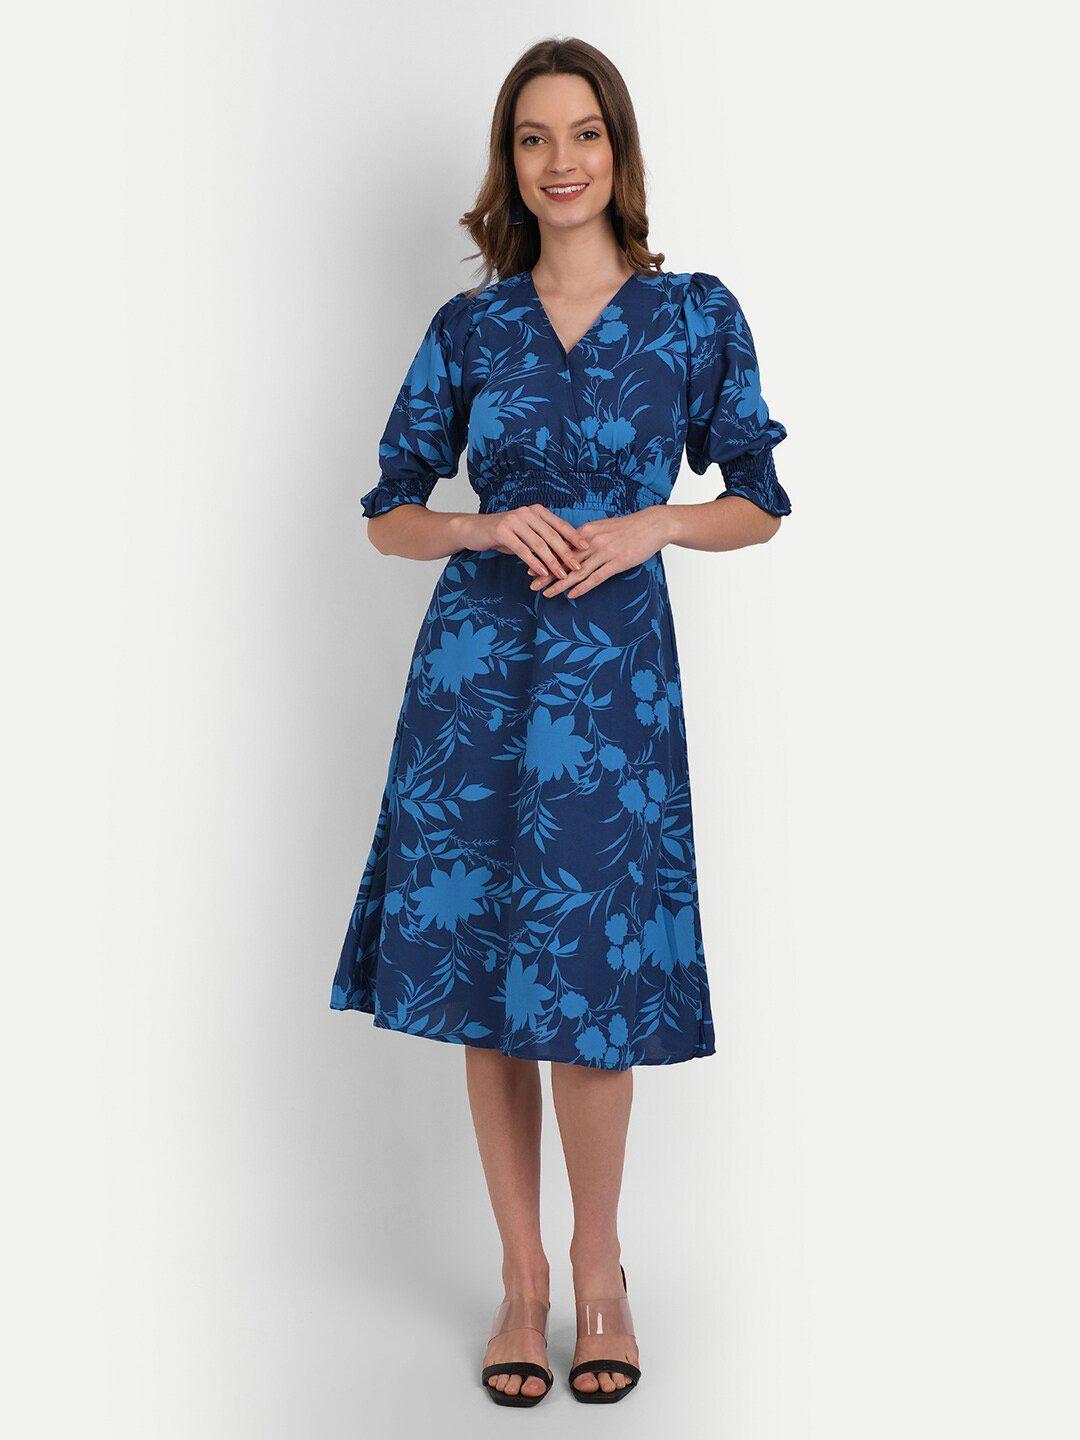 rediscover fashion navy blue floral crepe midi dress